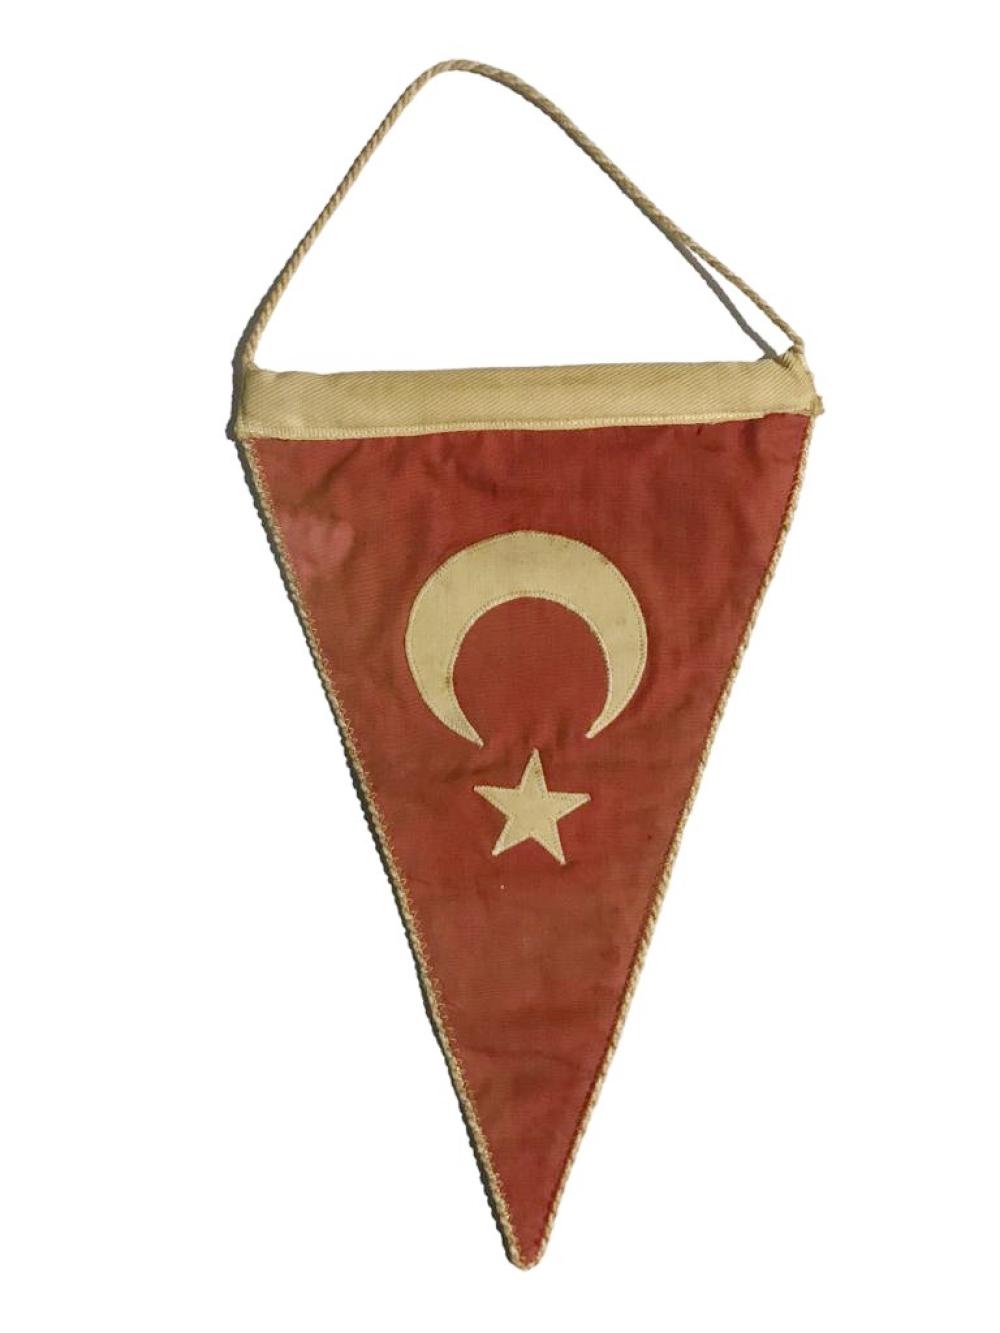 Büyük İstanbul 400 Eng II 1958 - Bayrak